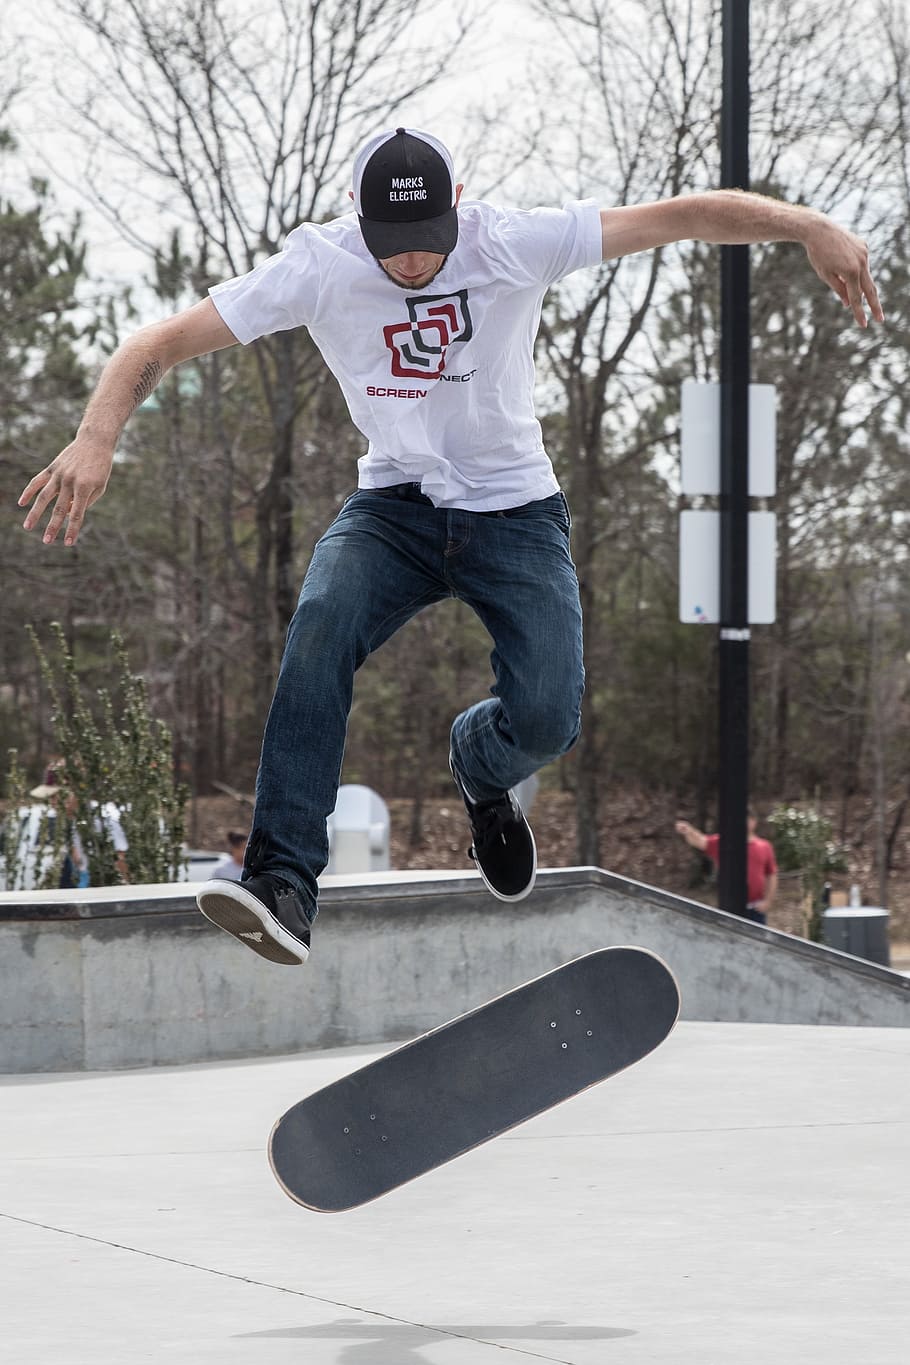 man flipping skateboard, fun, skate, skateboard, action, sport, mid-air, jumping, full length, real people